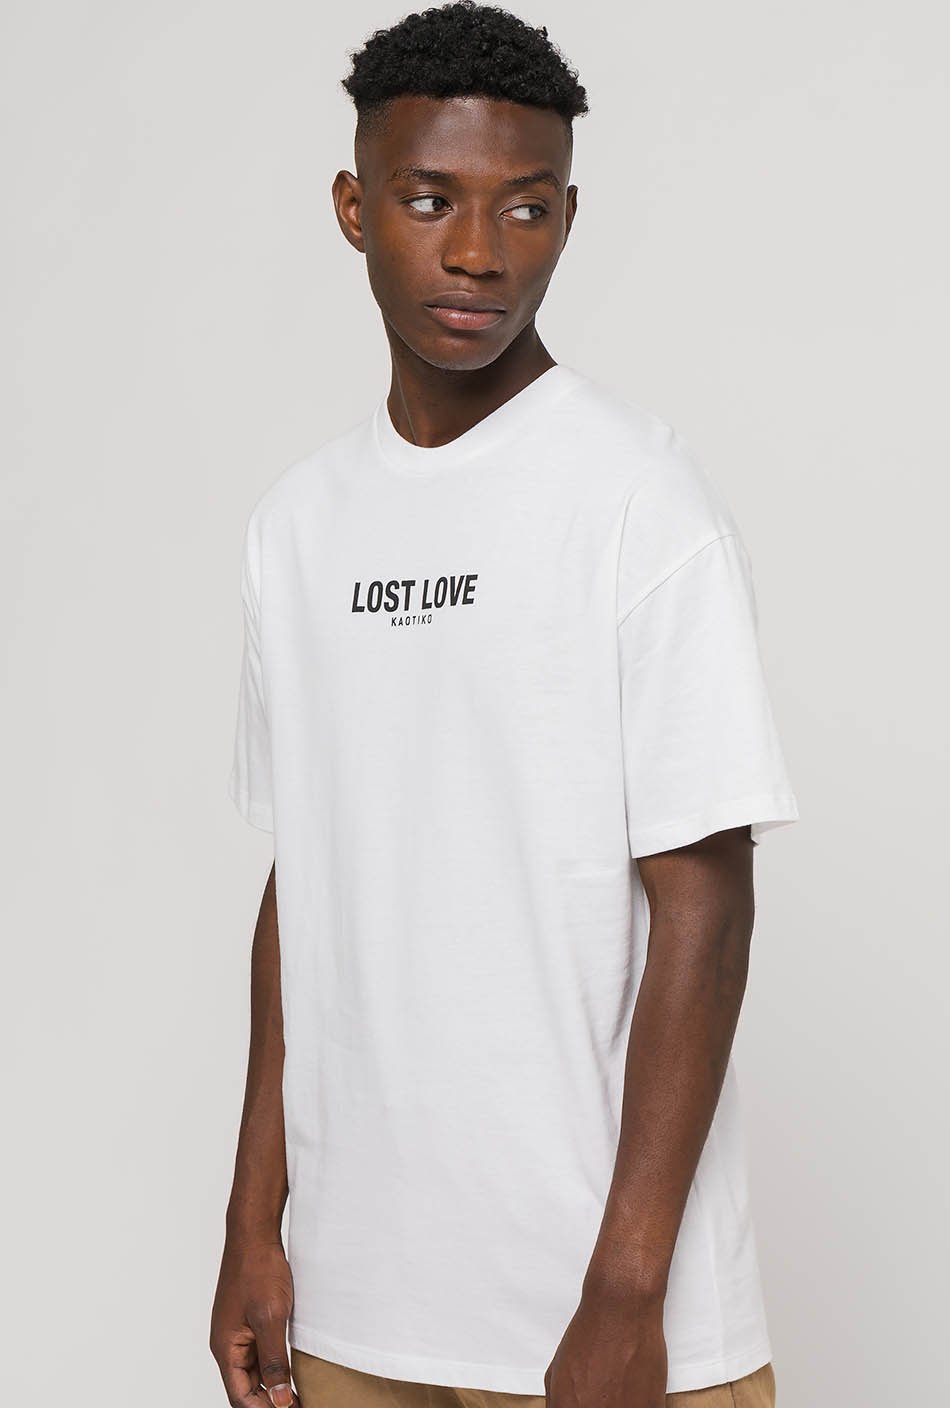 Lost Love white t-shirt